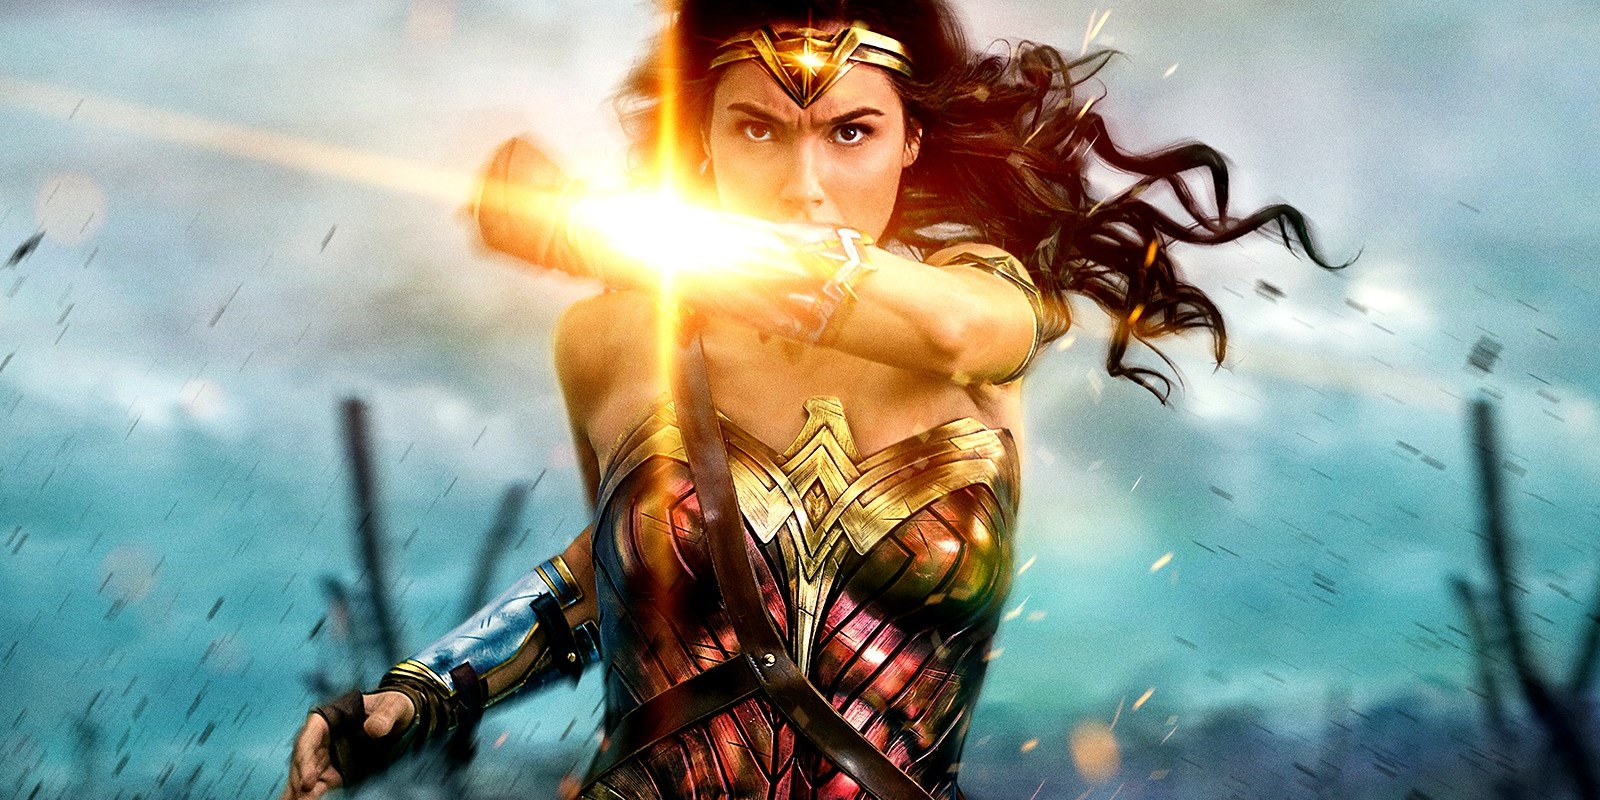 Breathe easy: 'Wonder Woman' is really good